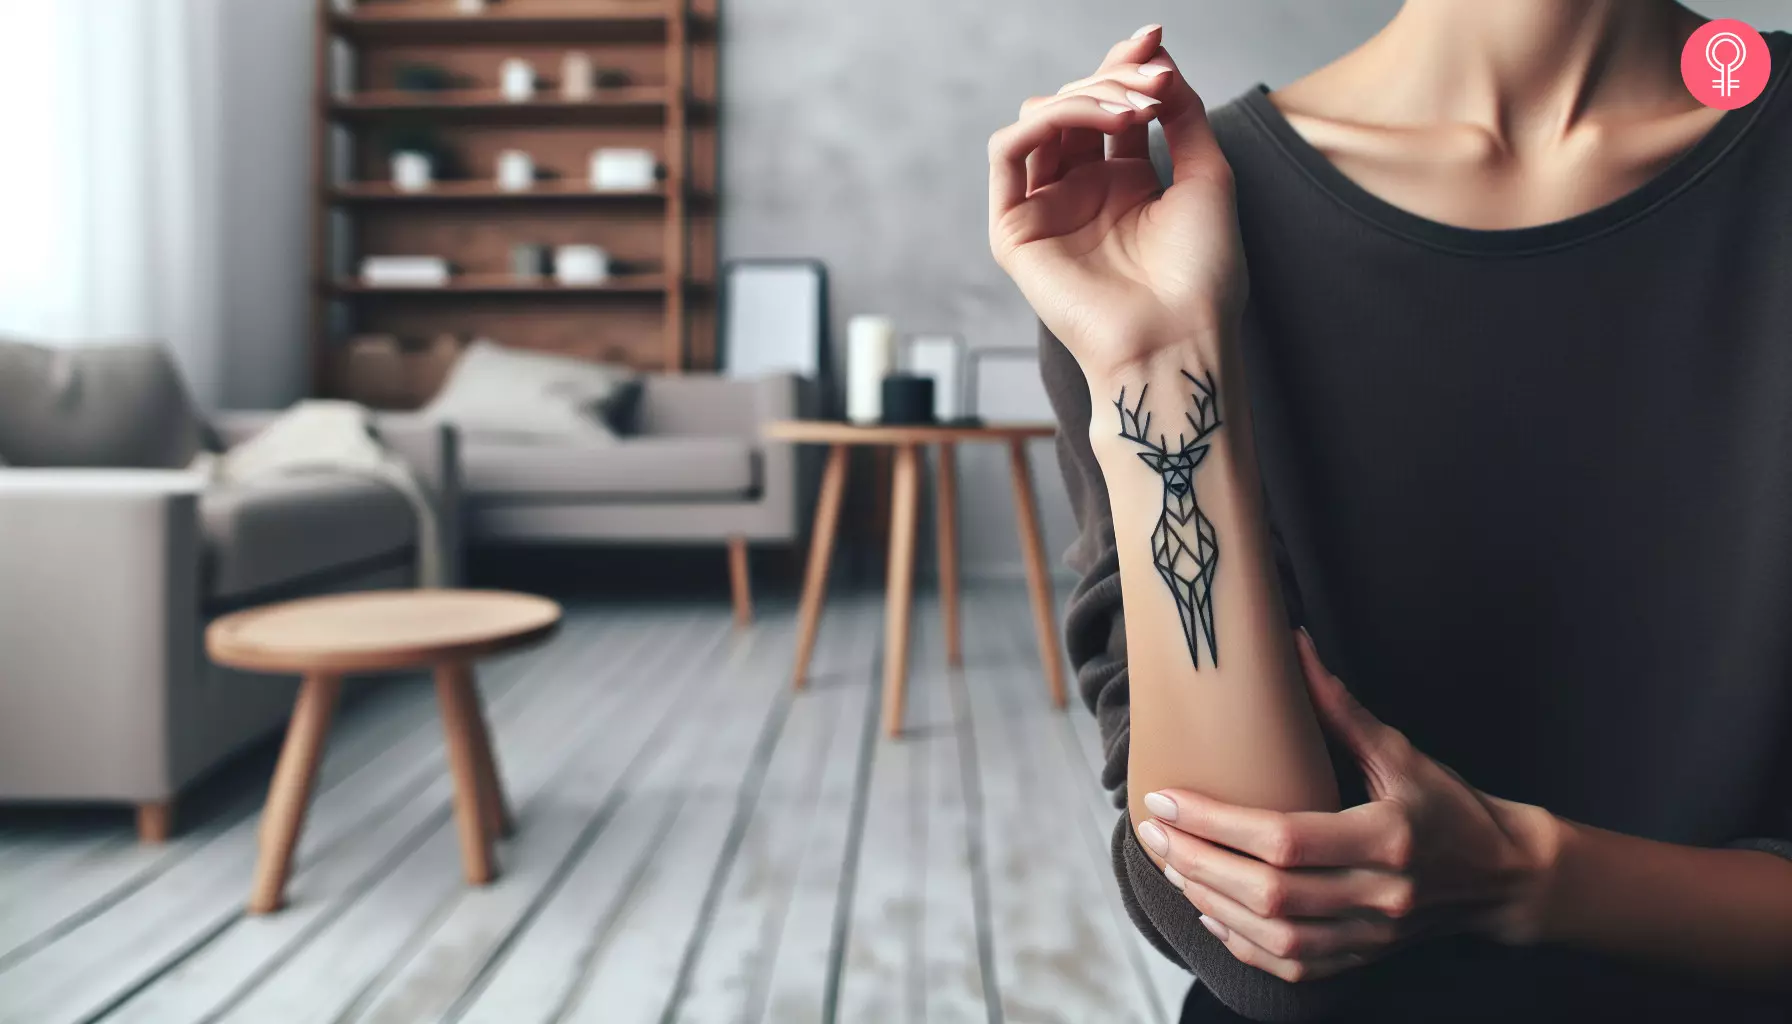 A geometric deer tattoo on the wrist